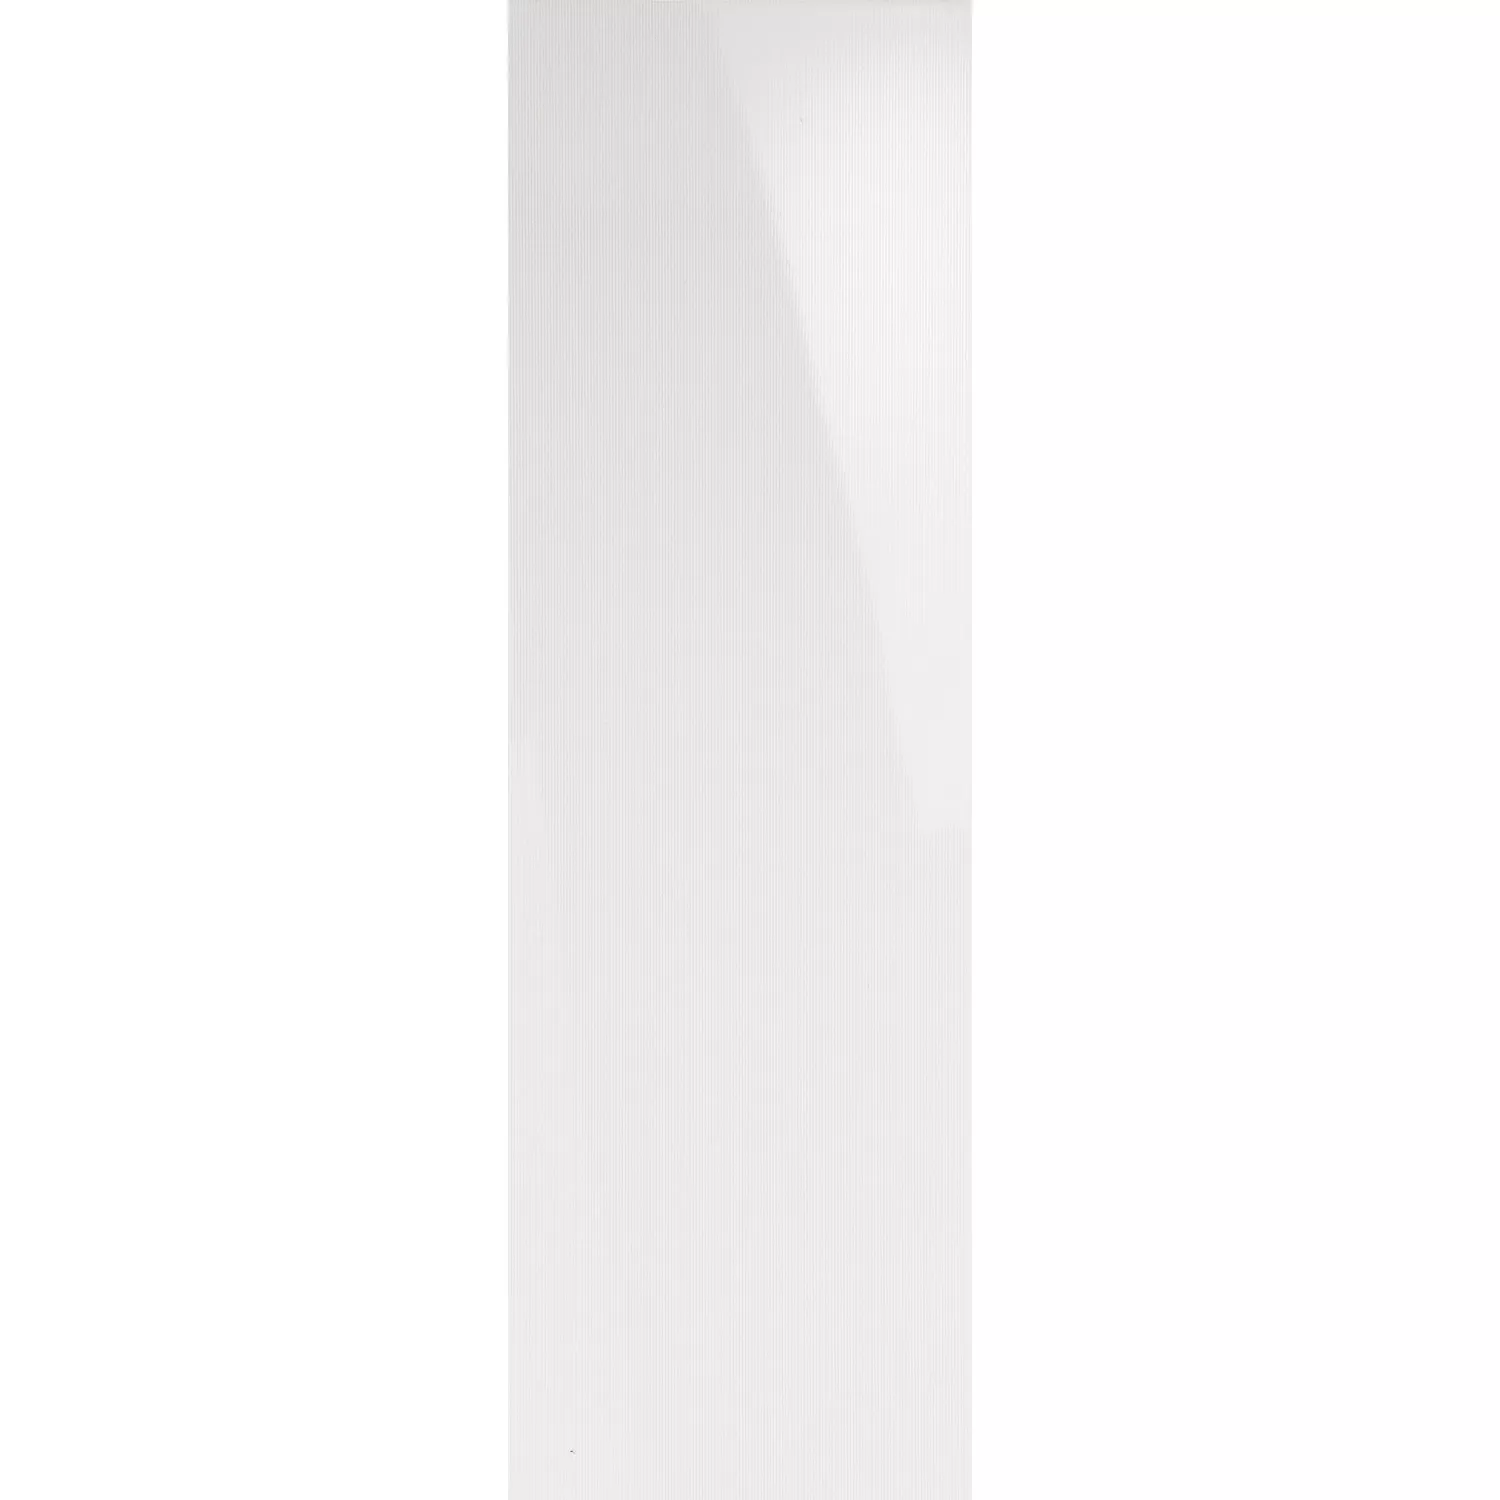 Échantillon Carrelage Mural Pelin Blanc Rayé Brillant 30x90cm